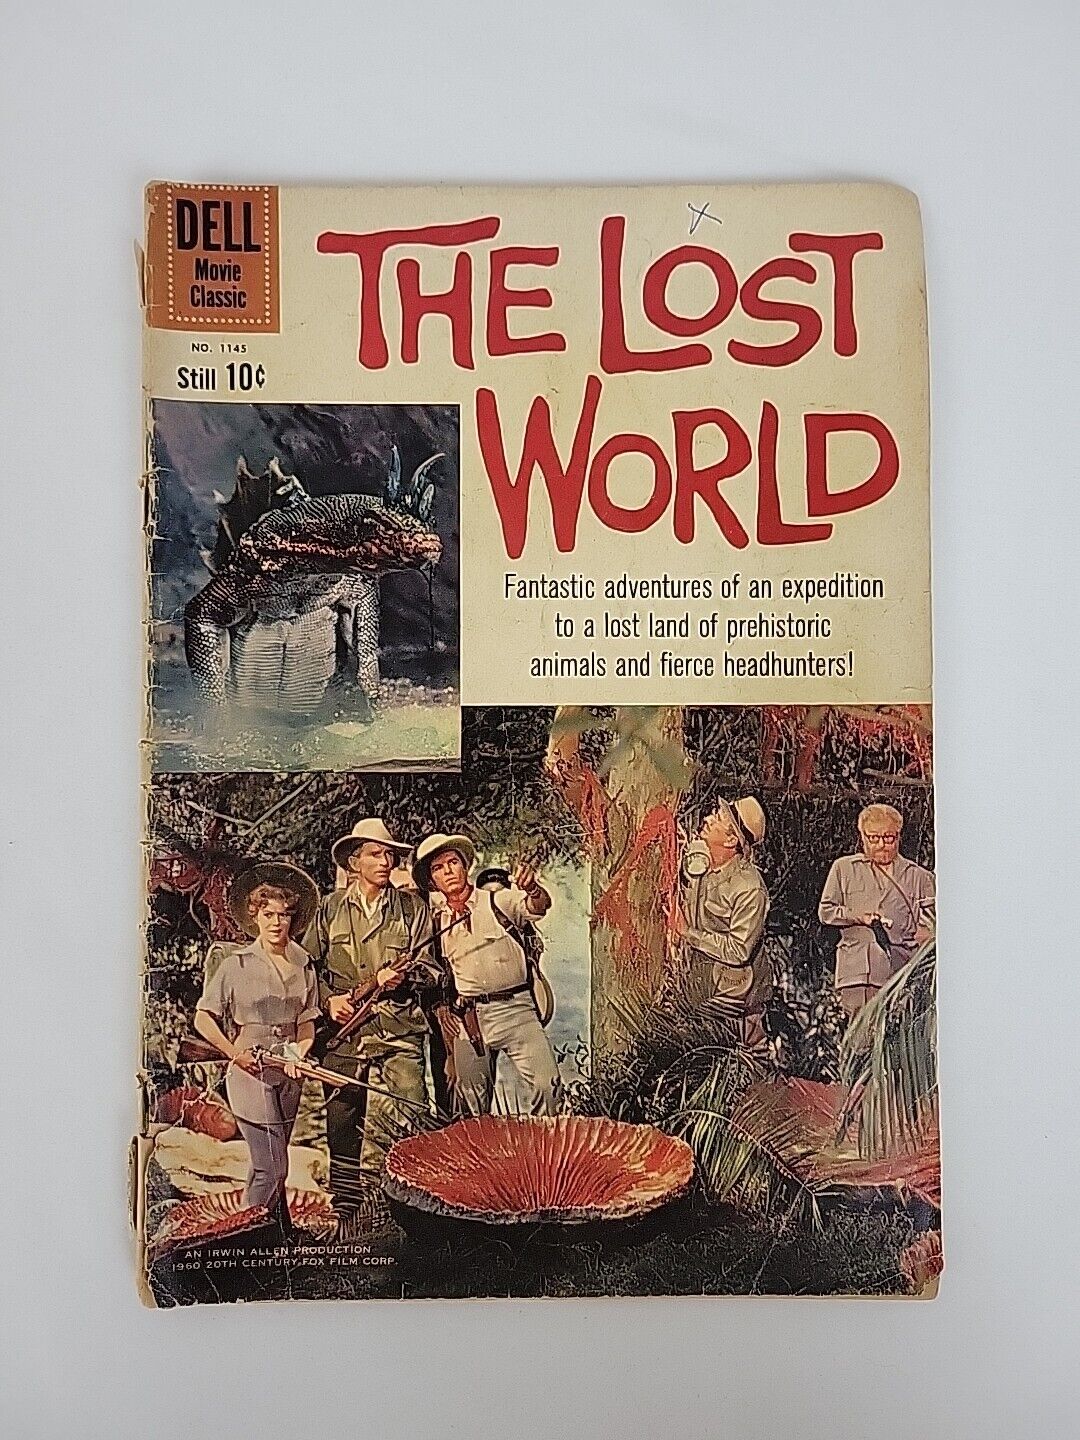 The Lost World Issue #1145 10 Cent Dell Movie Classic Comic Book 1960